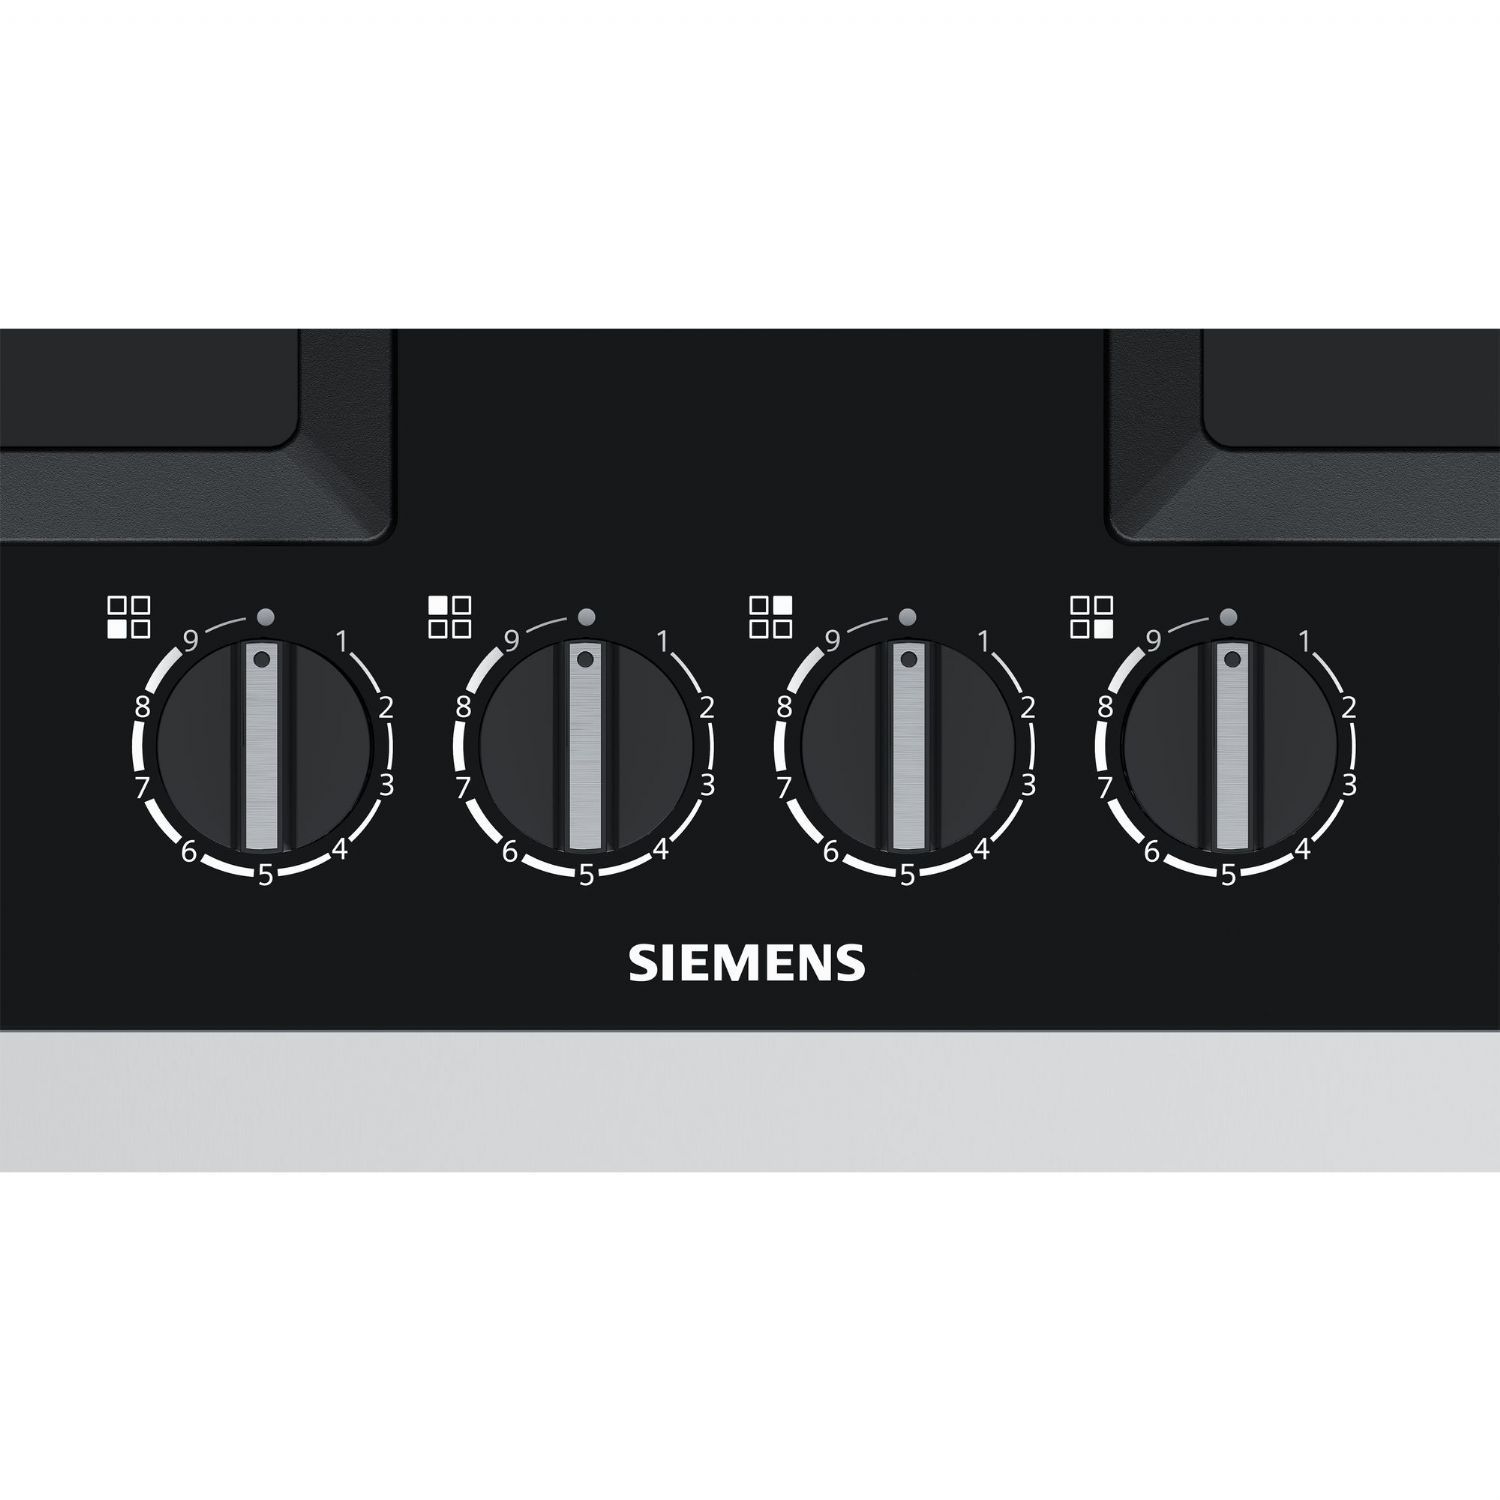 Ankastre Ocaklar | Siemens EP6A6PB20 Doğalgazlı Siyah Cam Ankastre Ocak Döküm Izgaralı | EP6A6PB20 | EP6A6PB20, Siemens EP6A6PB20, Siemens EP6A6PB20 Doğalgazlı Siyah Cam Ankastre Ocak Döküm Izgaralı | 